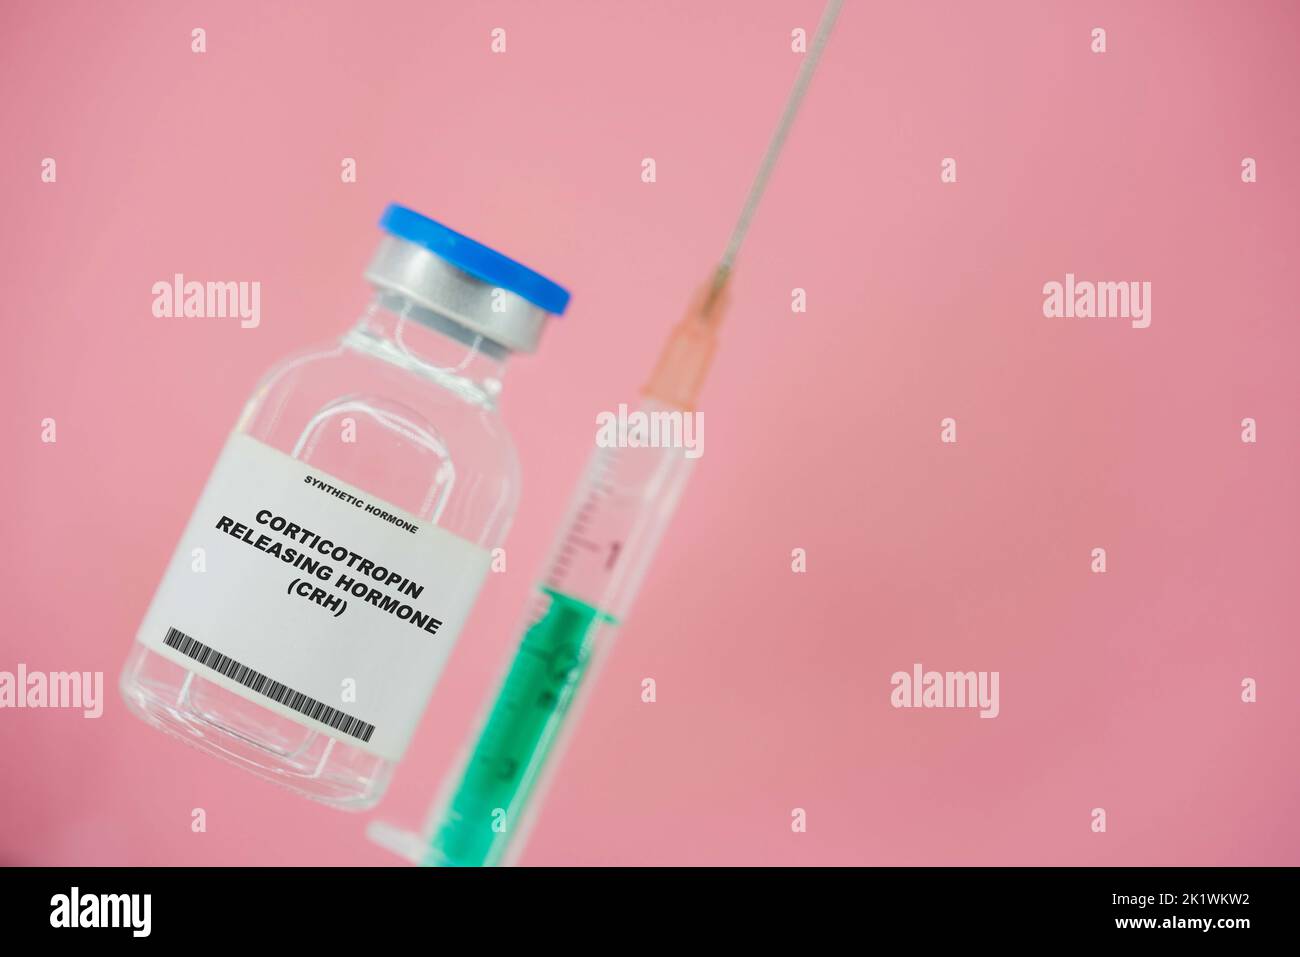 Corticotropin releasing hormone, conceptual image Stock Photo